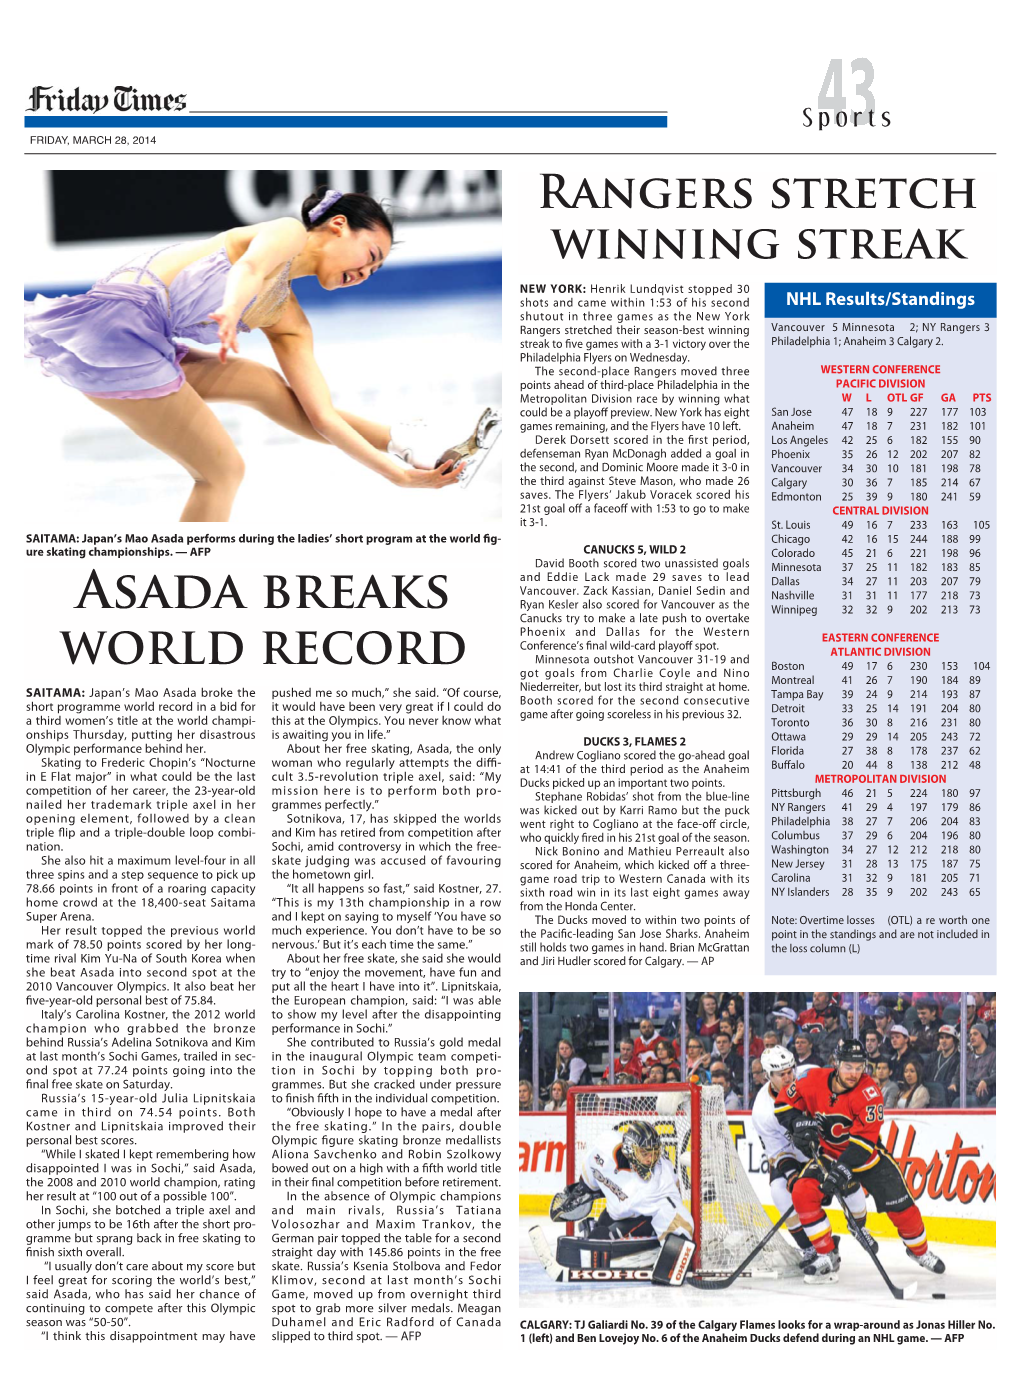 Asada Breaks World Record